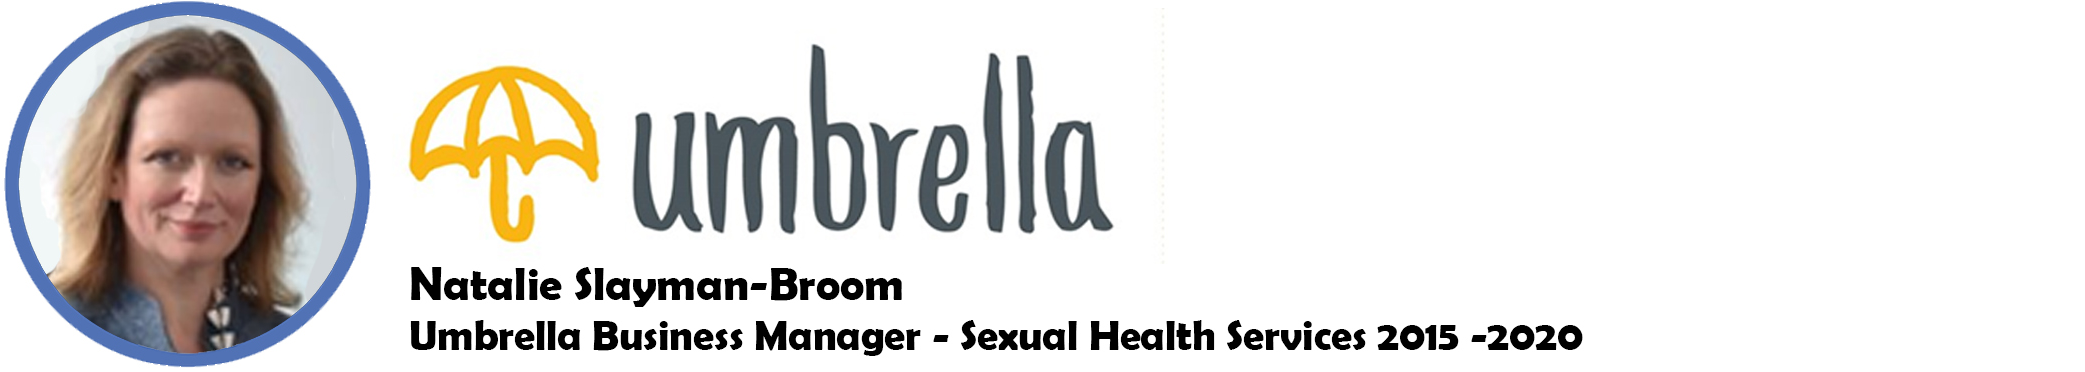 Natalie Slayman Broom - Umbrella Business Manager - Sexual Health Services 2015-2020